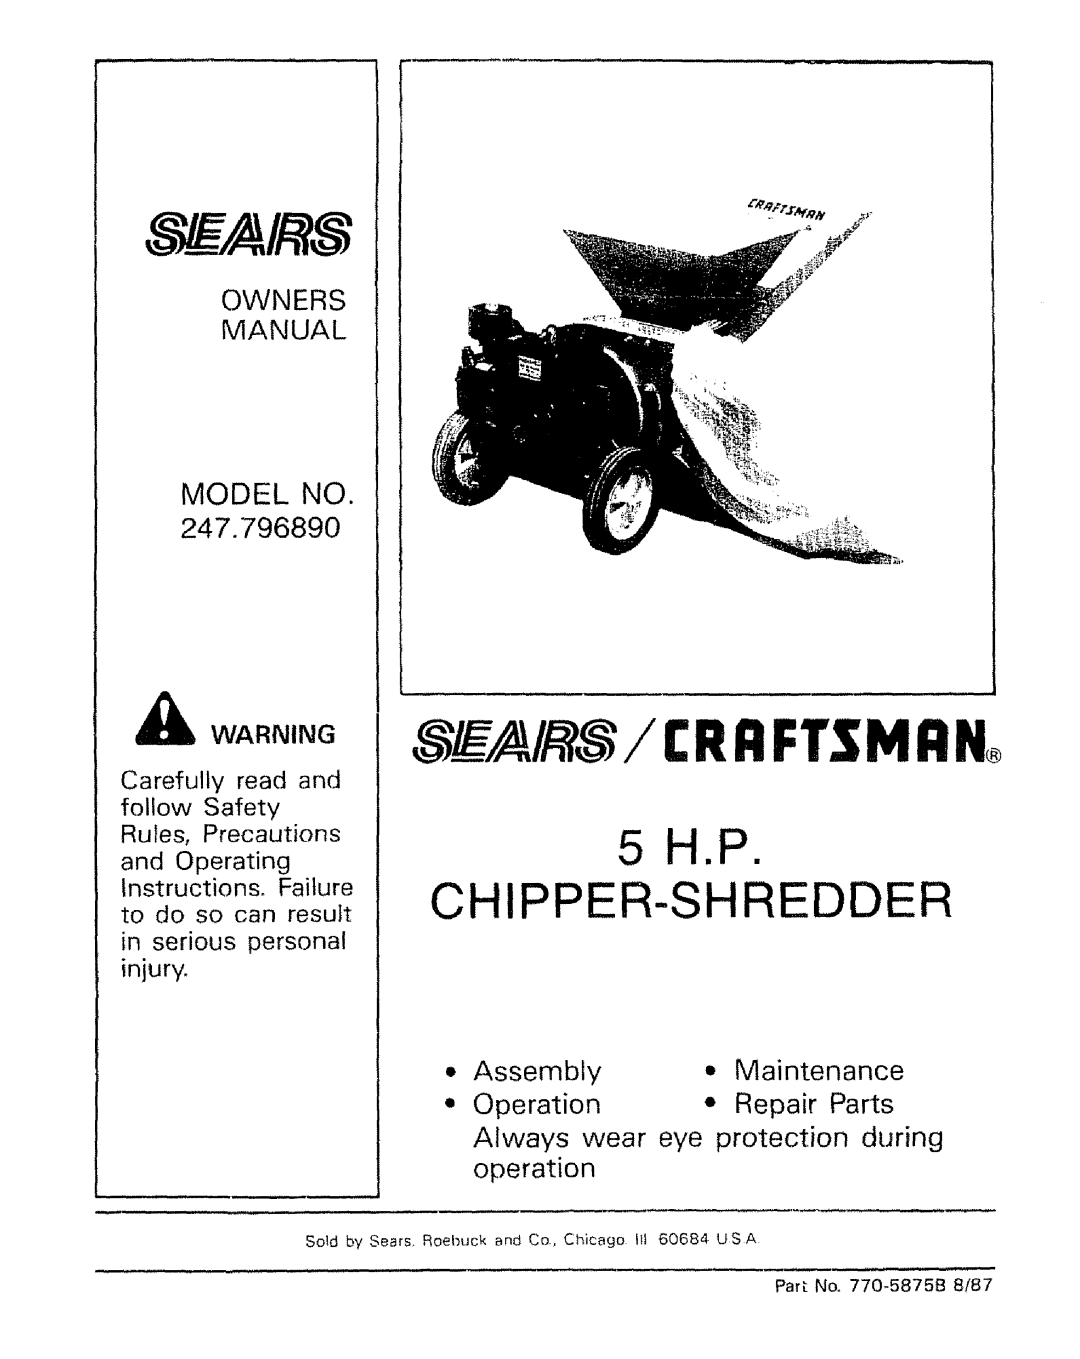 Craftsman 770-5875B, 247.796890 manual 5H.P CHIPPER-SHREDDER, Assembly, Maintenance, Operation, Repair Parts 